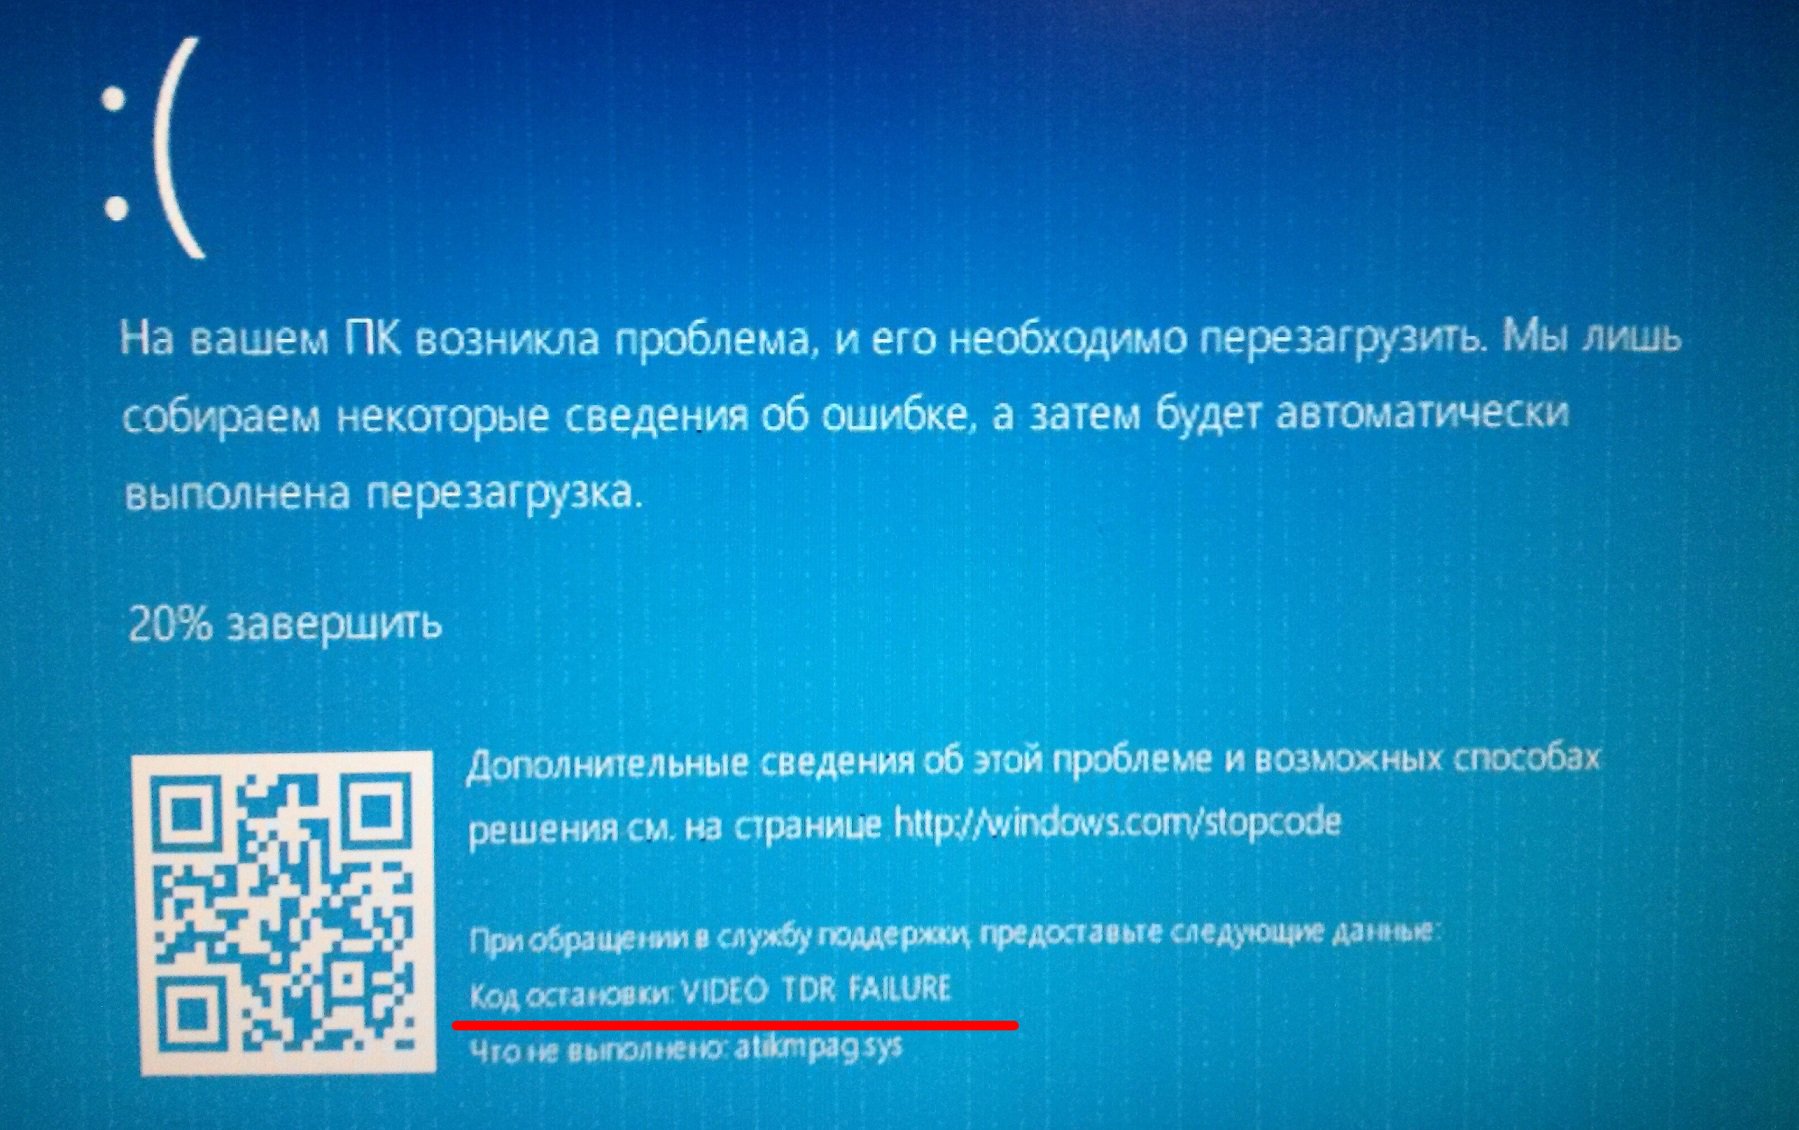 Video_tdr_failure ошибка в windows 10